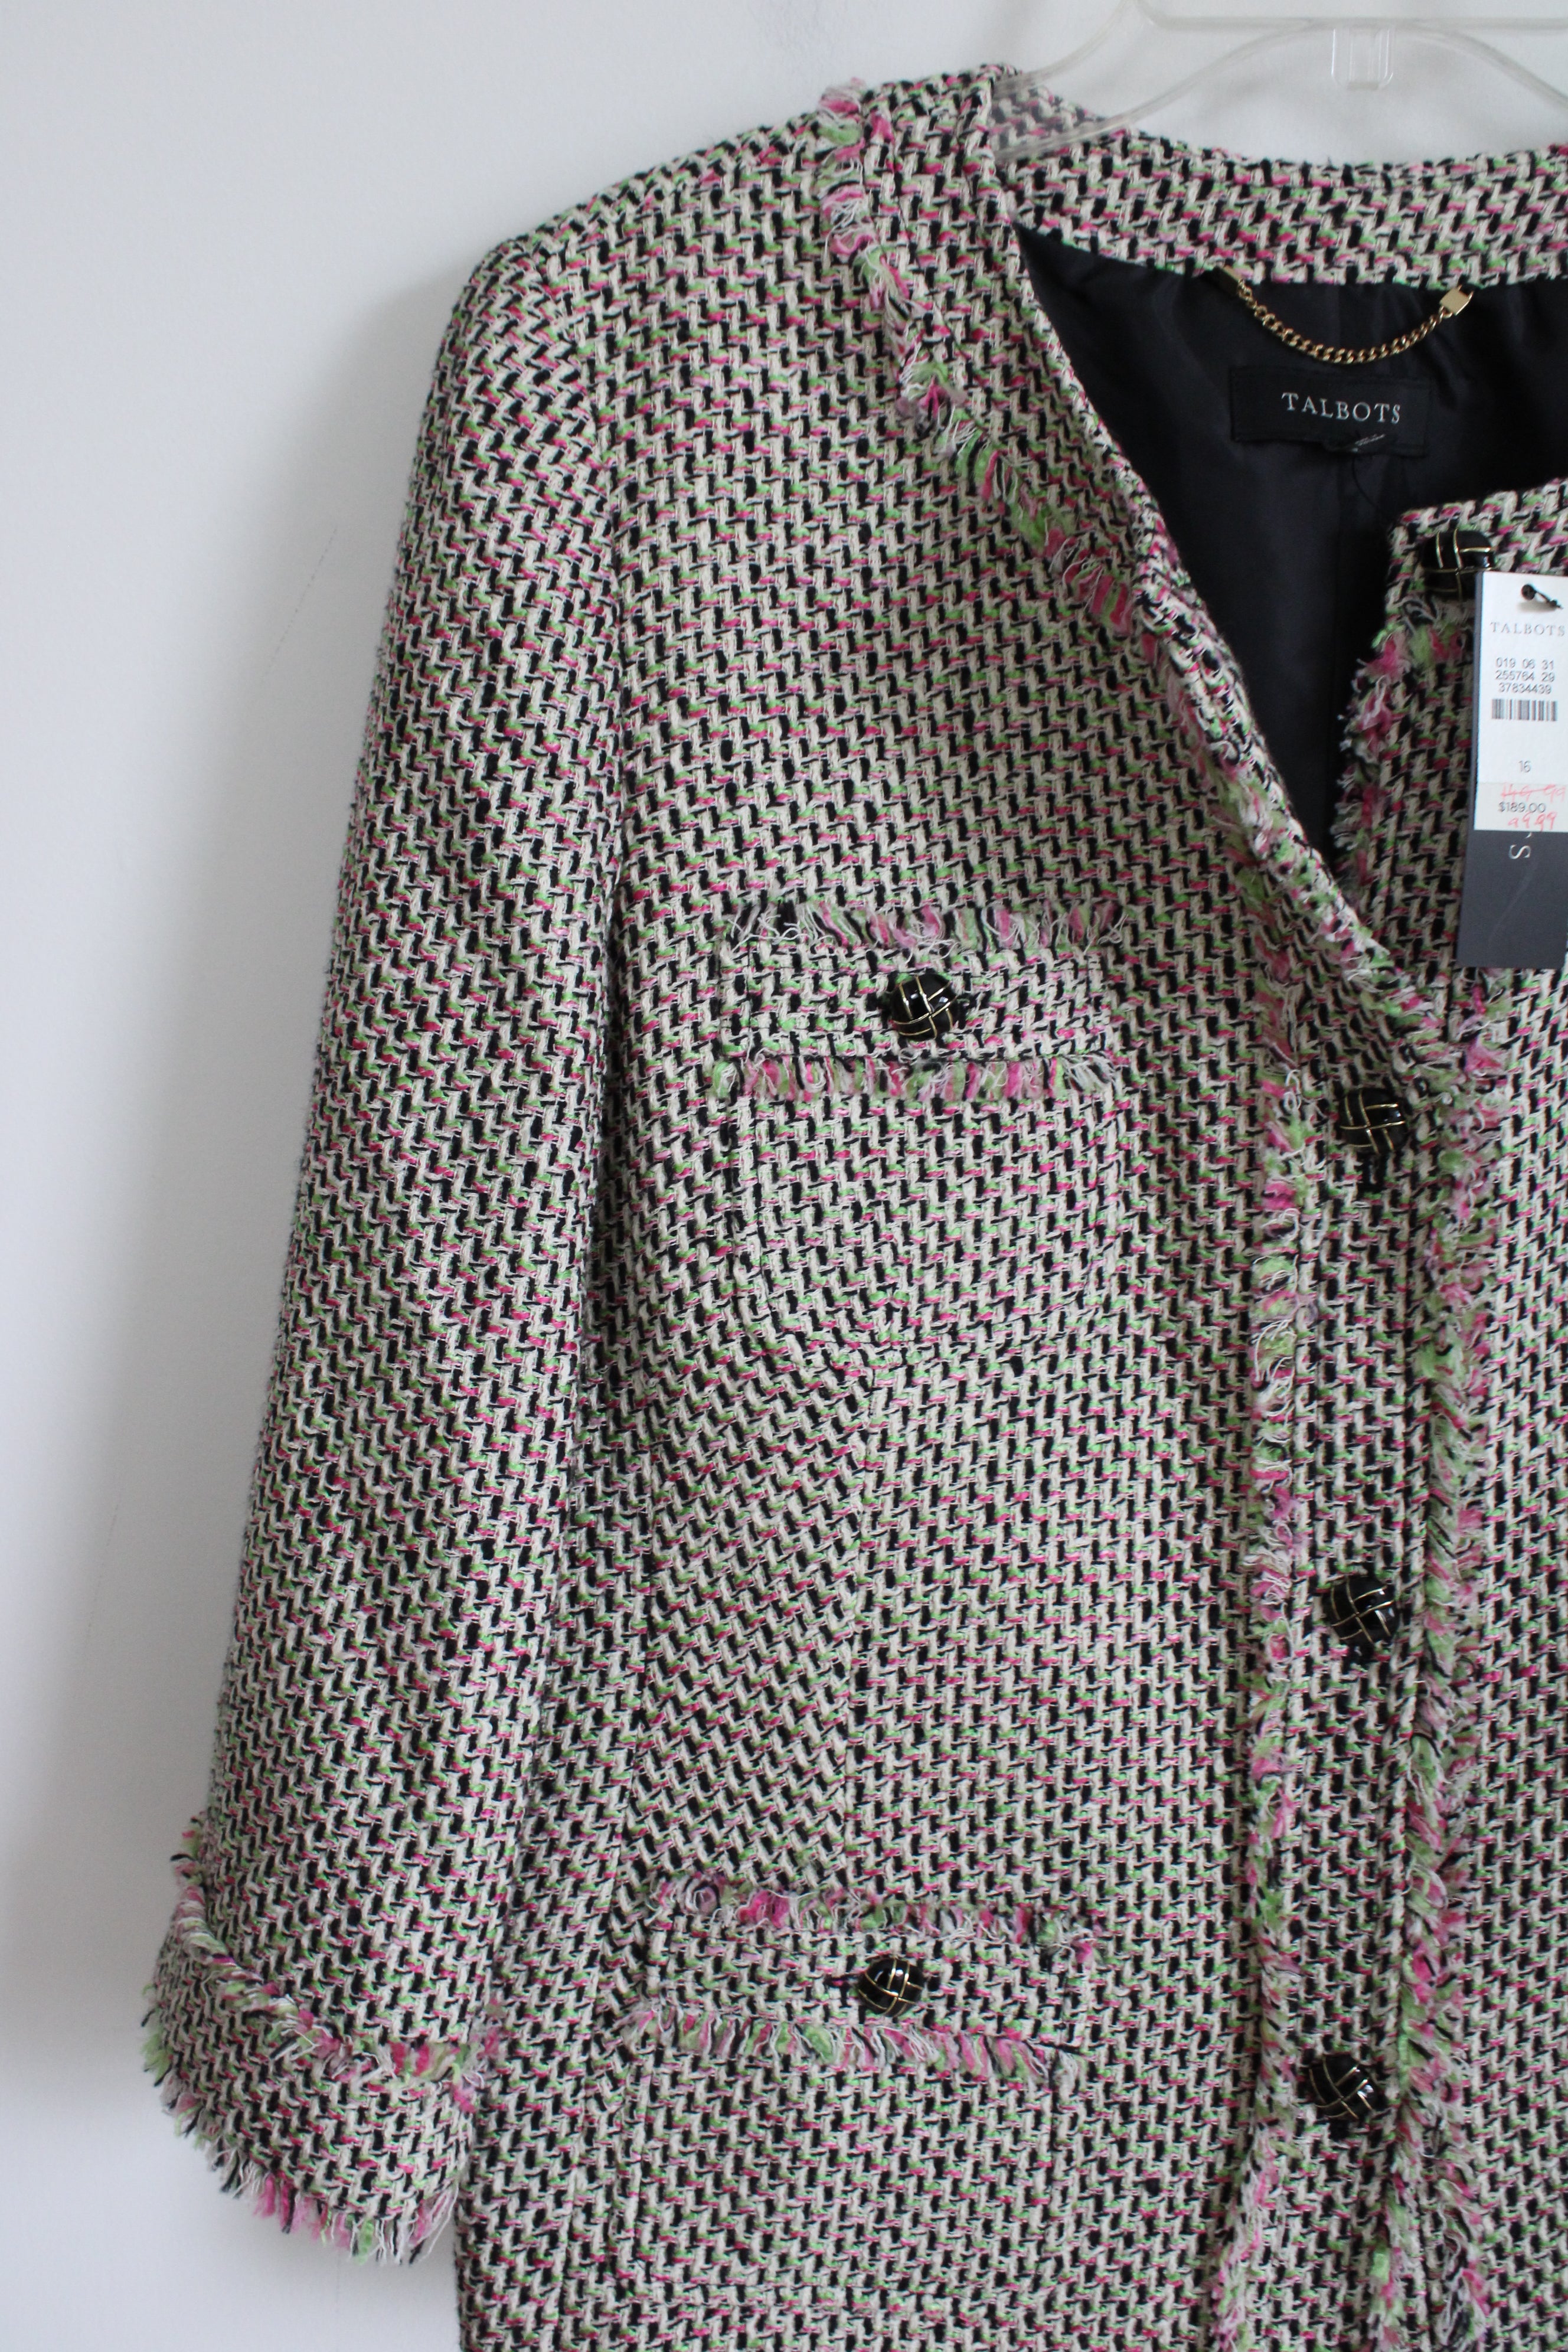 NEW Talbots Pink Green Tweed Jacket | 16